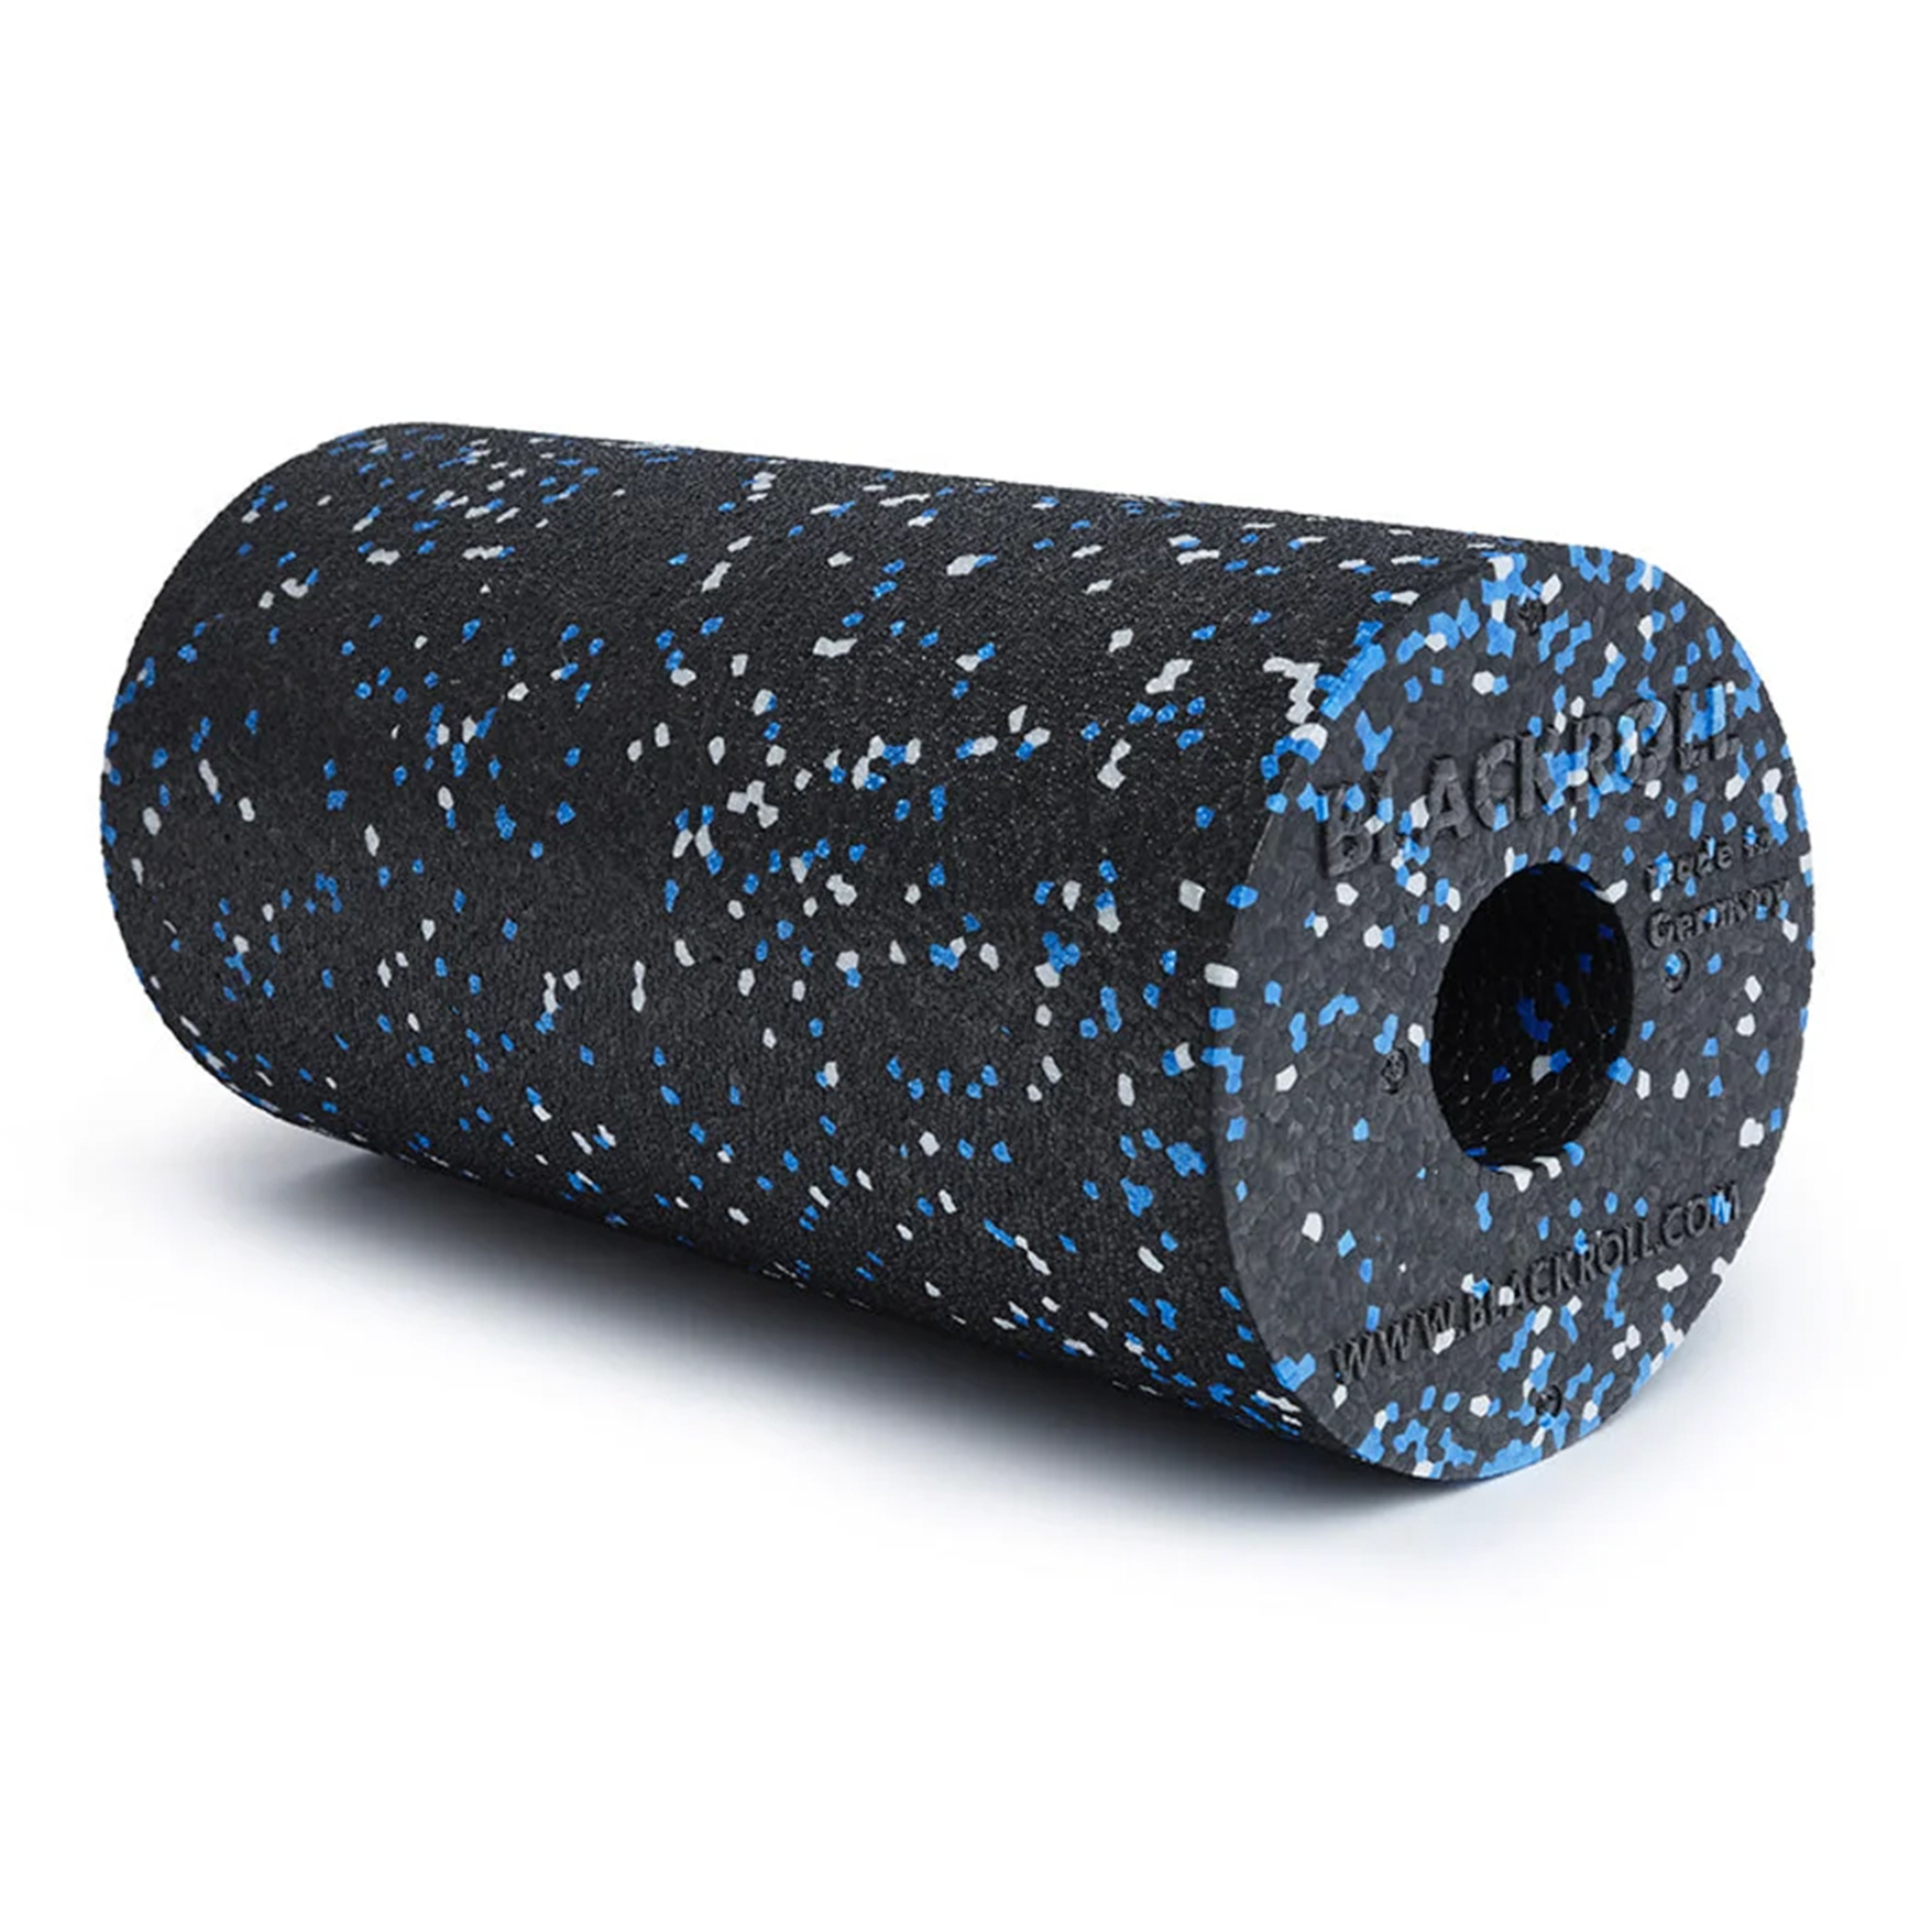 Blackroll Standard Foam Roller - Sort/hvid/blå - 30 x 15 cm